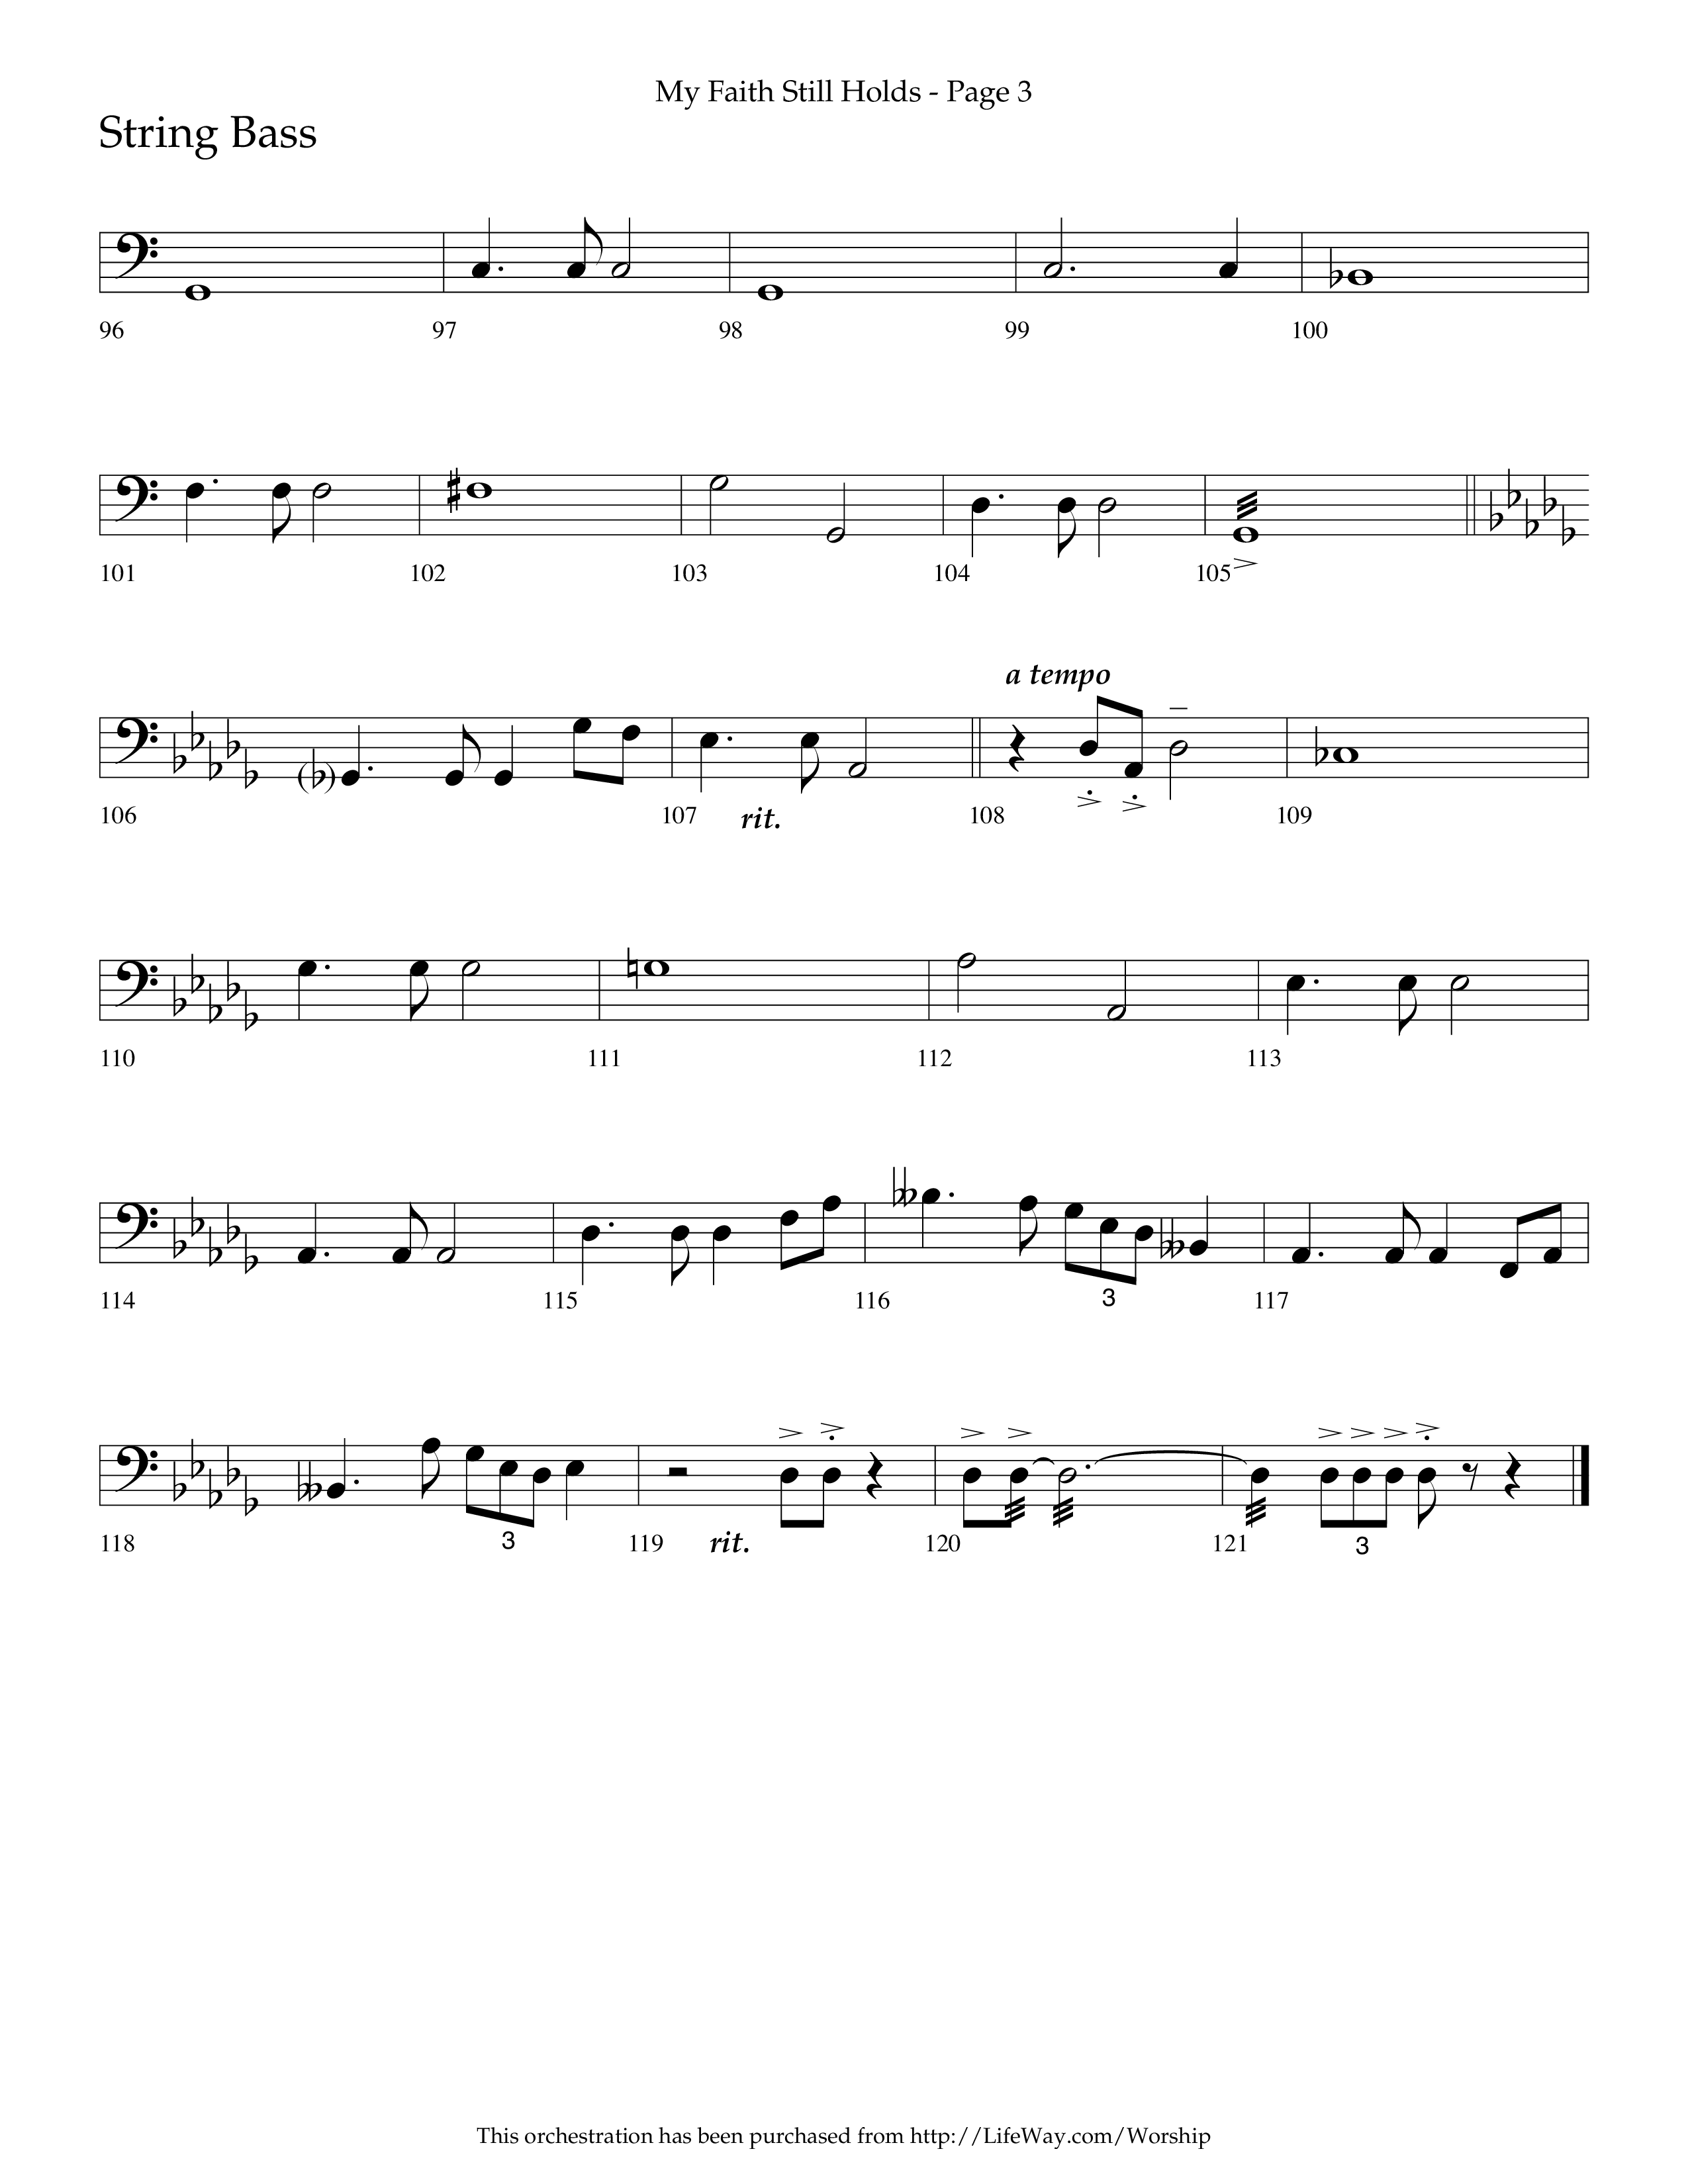 My Faith Still Holds (Choral Anthem SATB) String Bass (Lifeway Choral / Arr. Russell Mauldin)